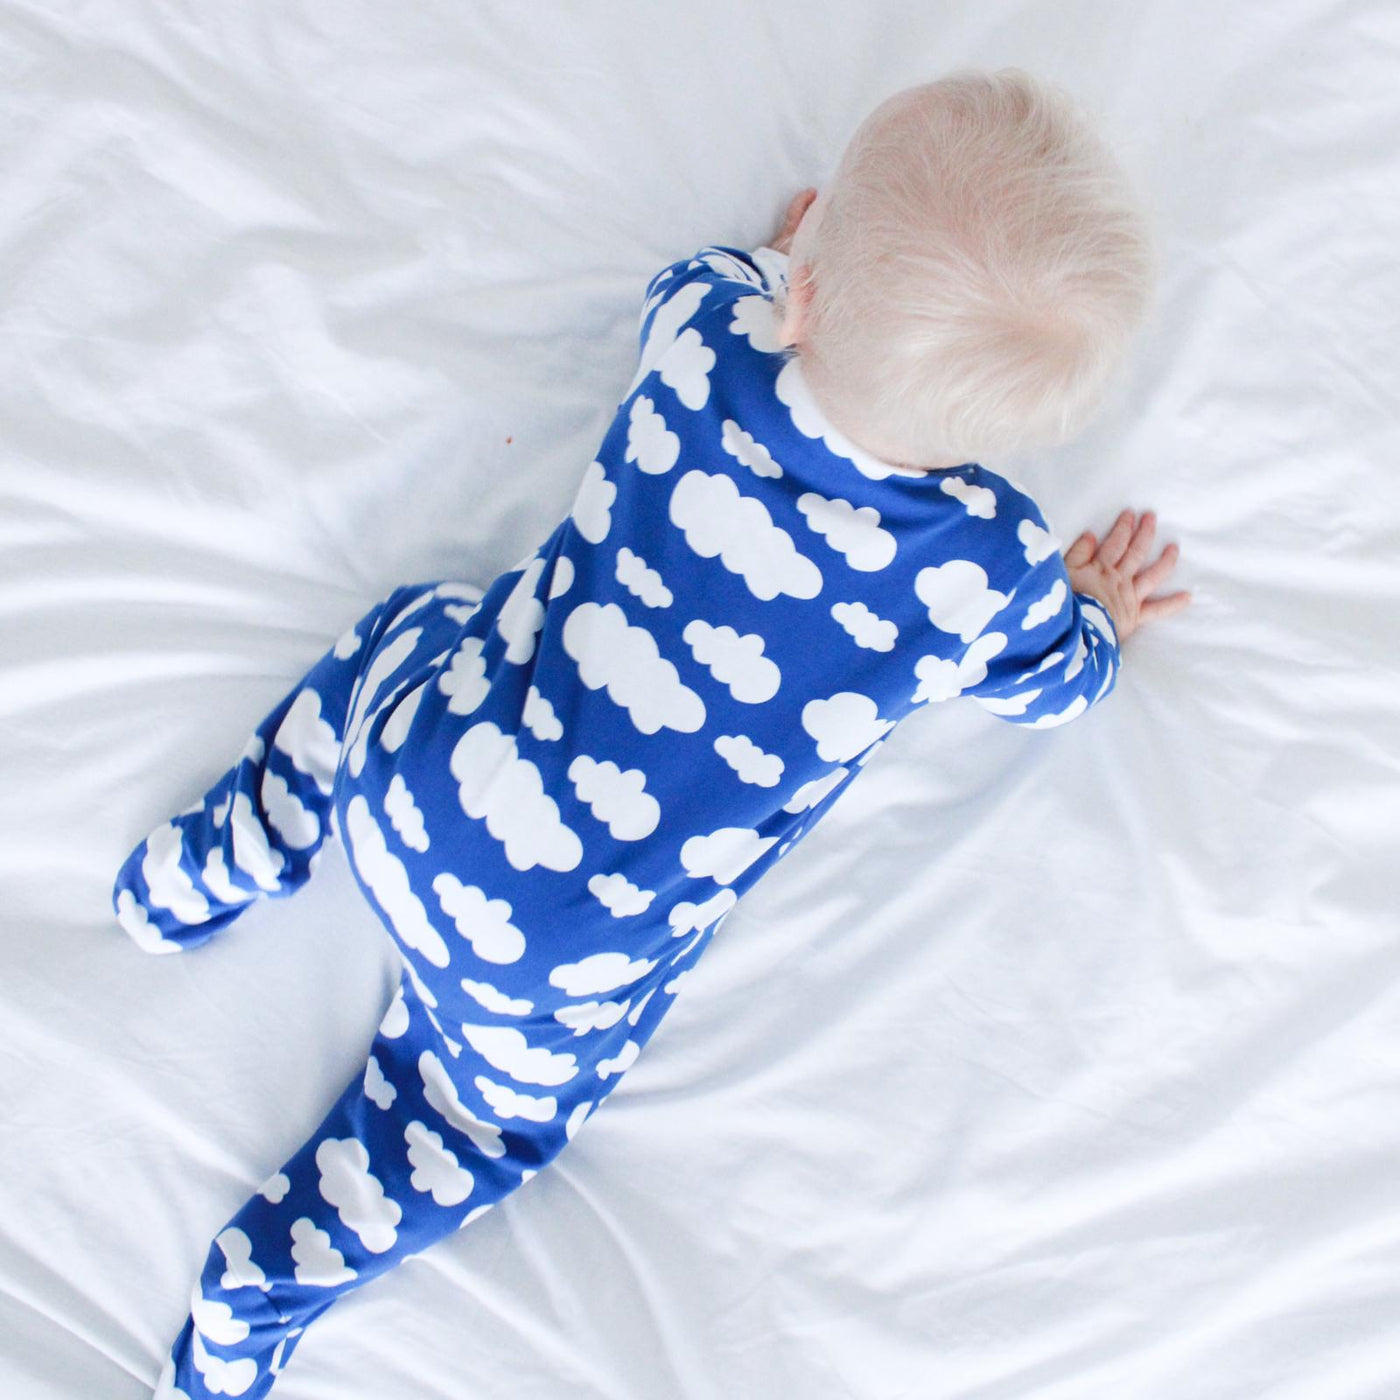 Blue Cloud Cotton Sleepsuit-Sleepsuit-Fred & Noah-Yes Bebe